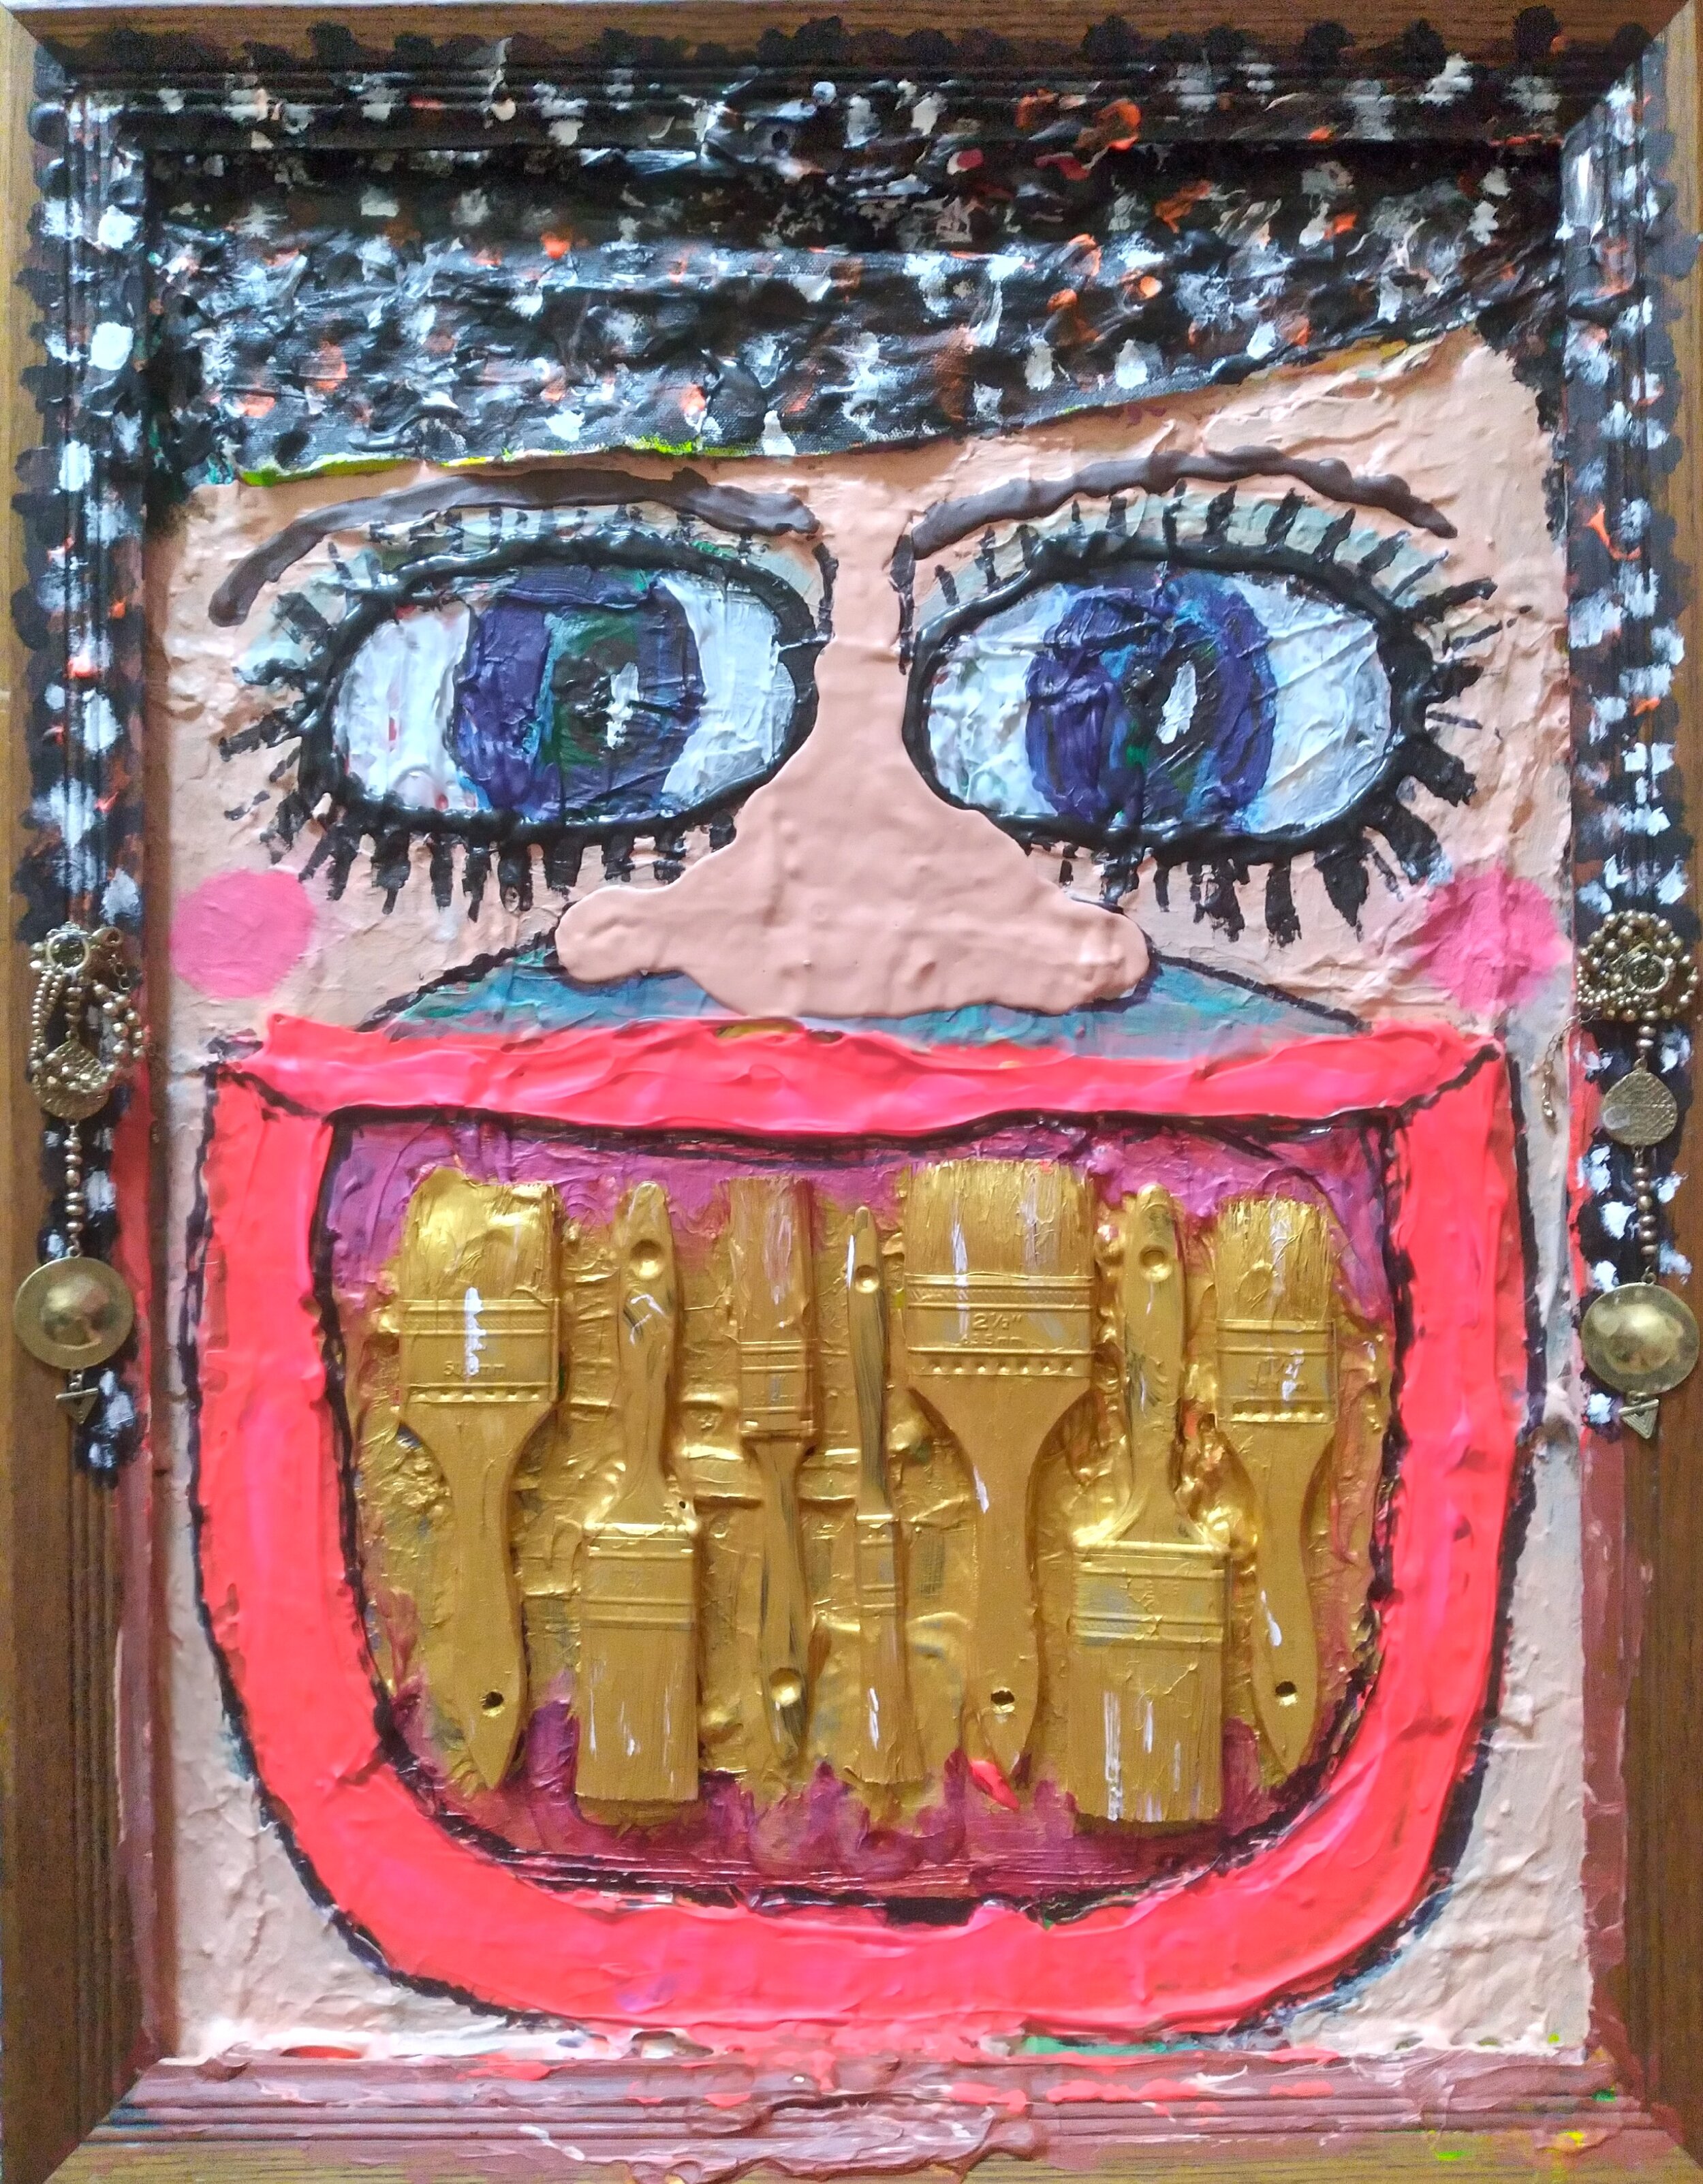 Gold Teeth, 2014. Oil, acrylic, brushes on canvas. 27” x 21”.